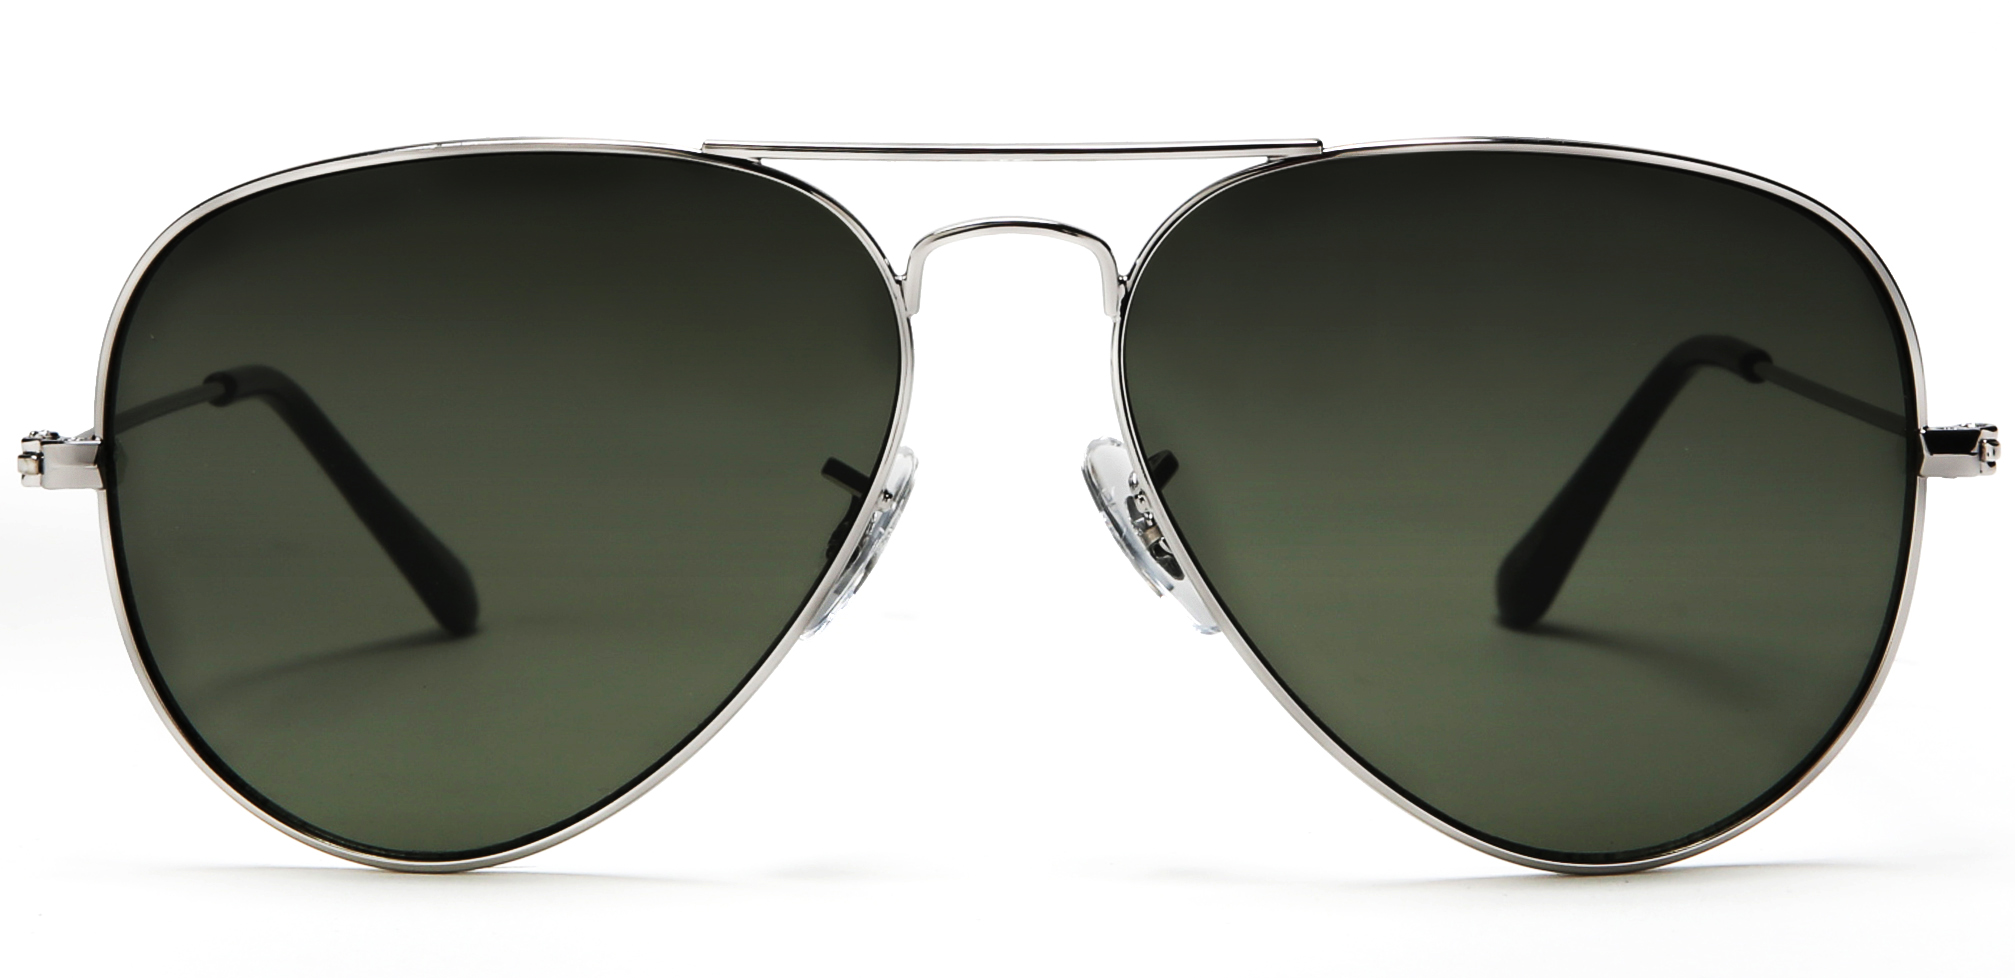 Samba Shades Unisex Classic Aviator Sunglasses Silver Frame Green Lens - Glen & Ivy Sky Inspired - image 1 of 4